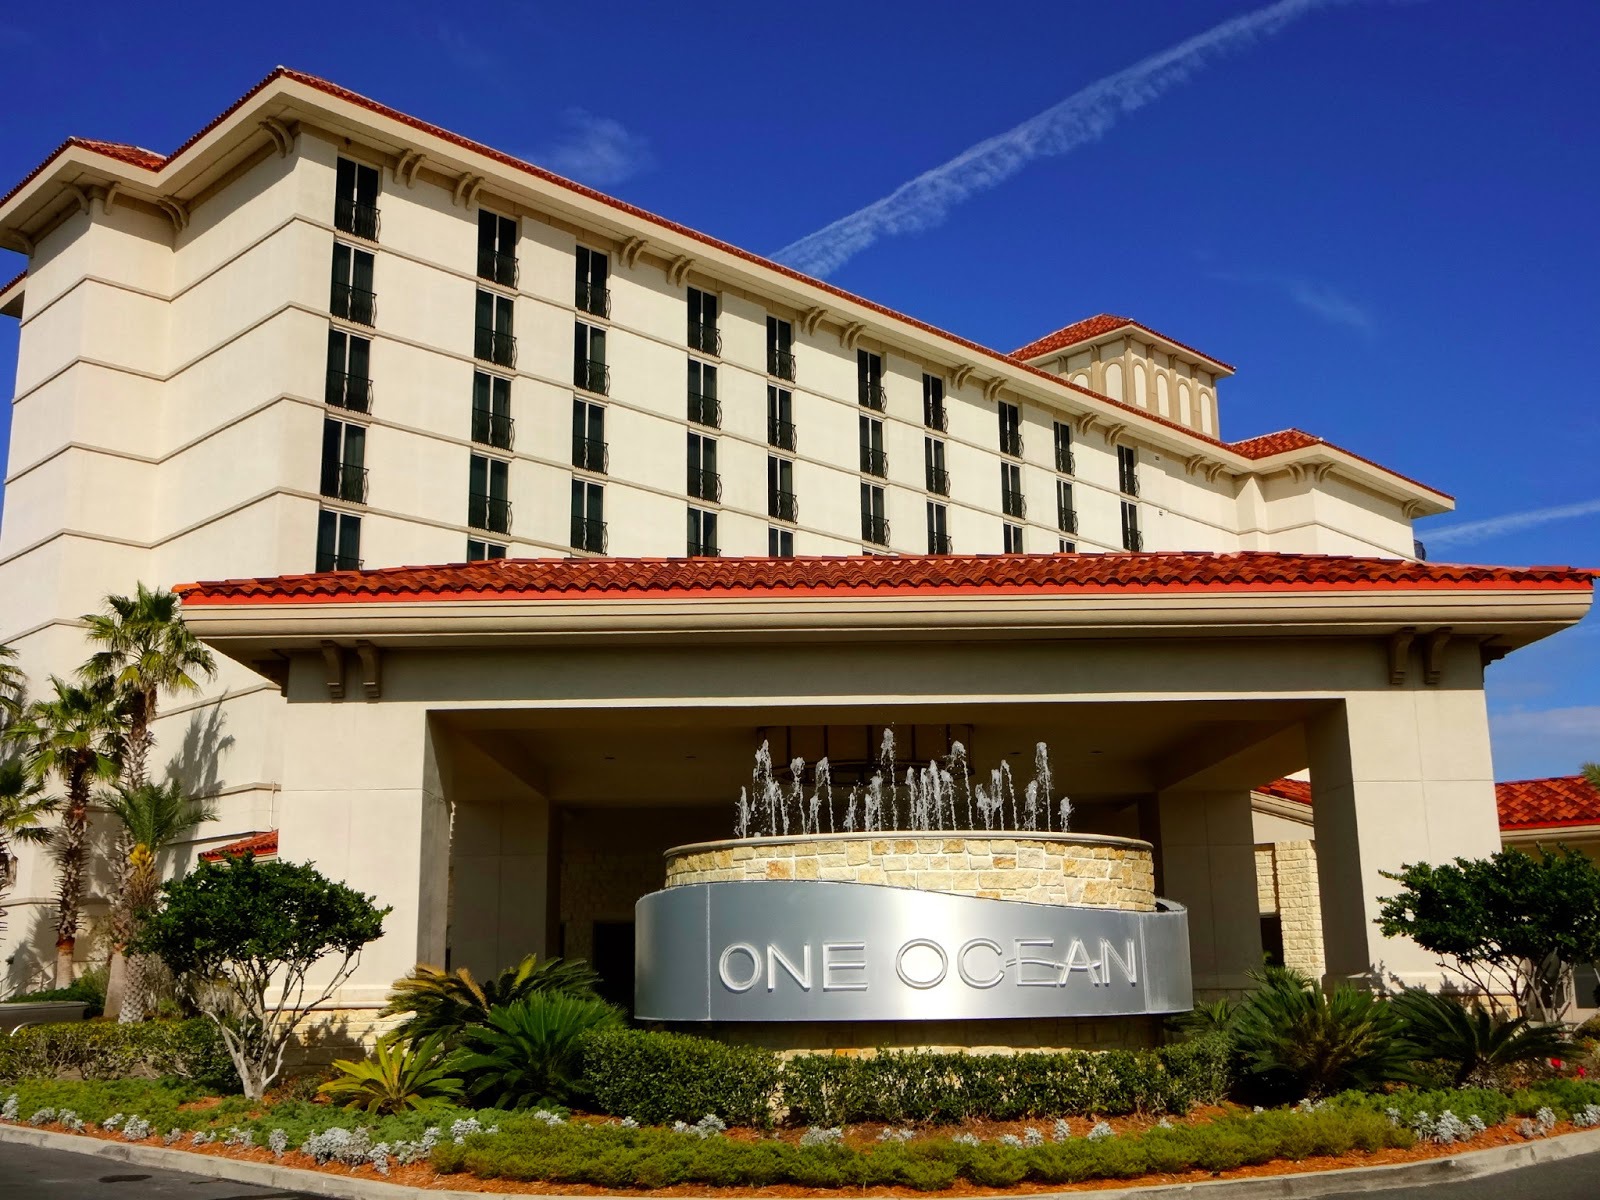 Photo of One Ocean Resort & Spa, Atlantic Beach, FL